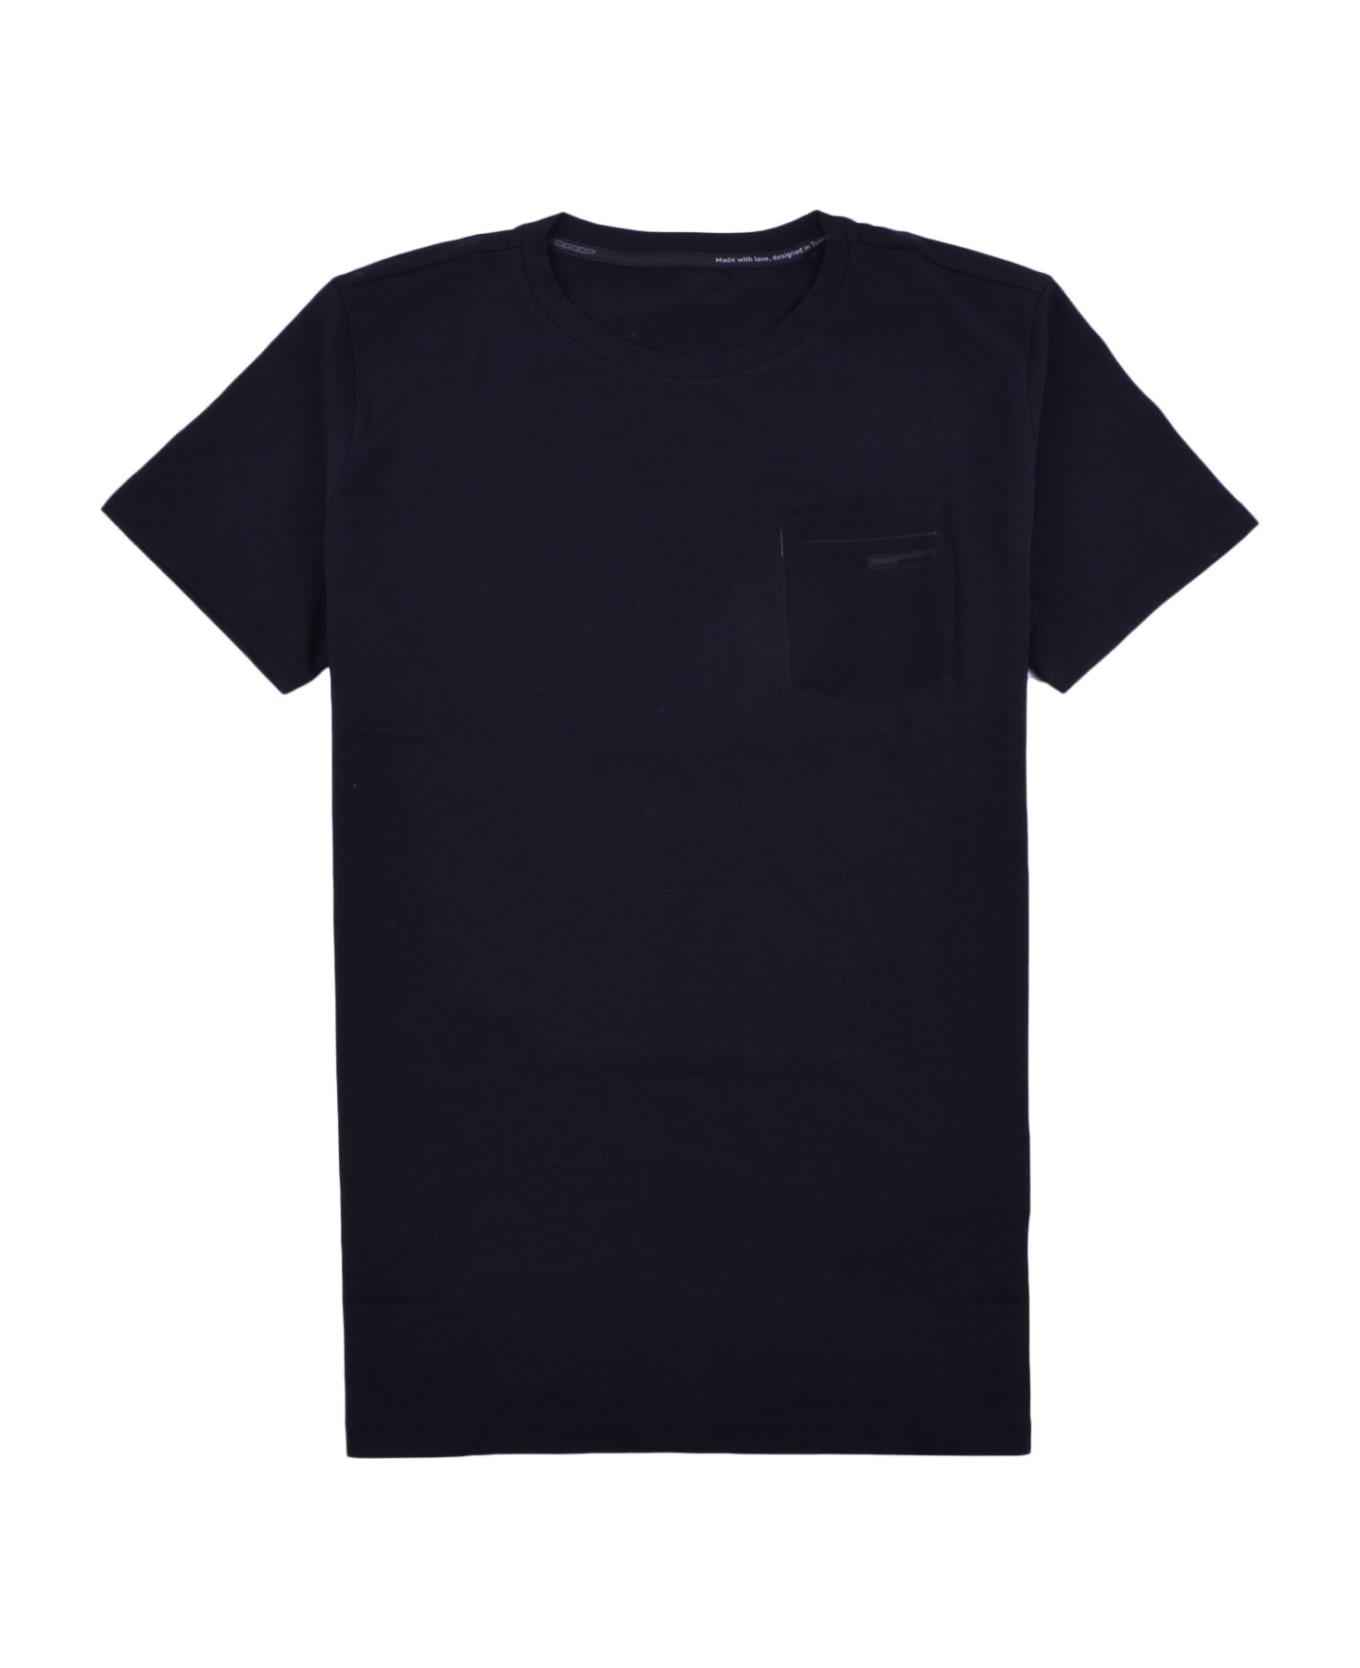 RRD - Roberto Ricci Design T-shirt - Nero